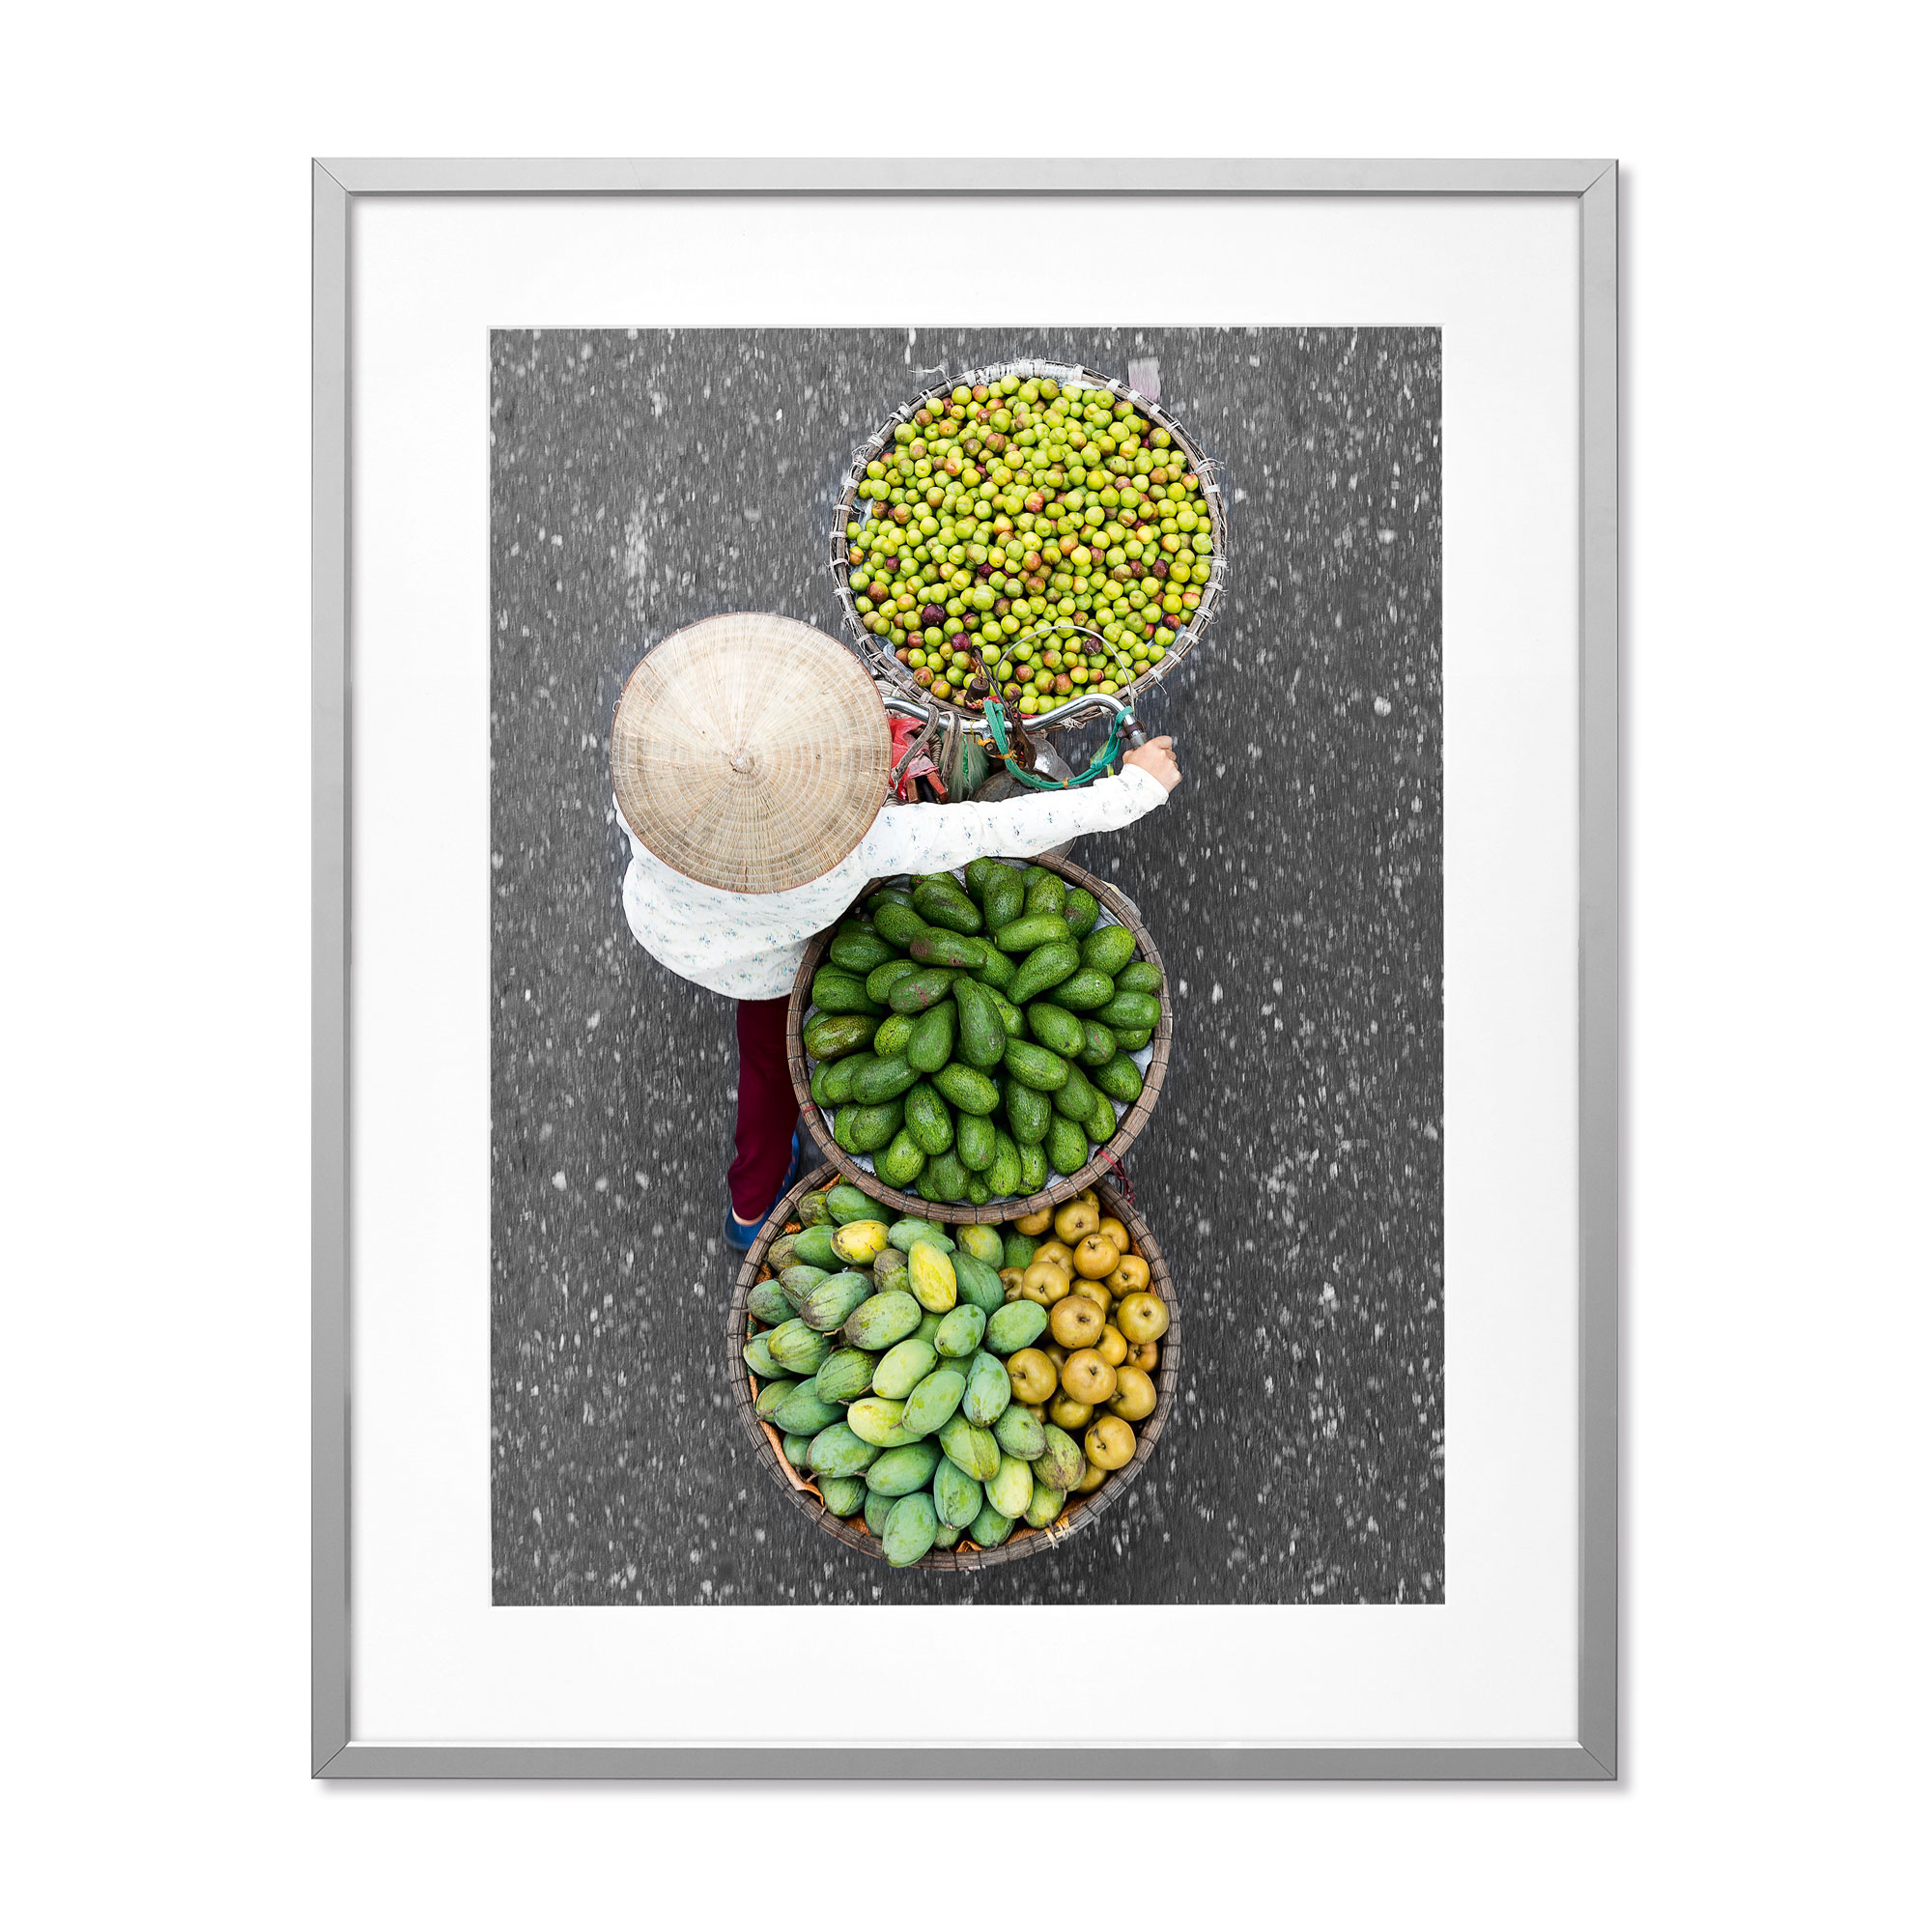 Loes Heerink | 2015 | Gemüsehändlerin